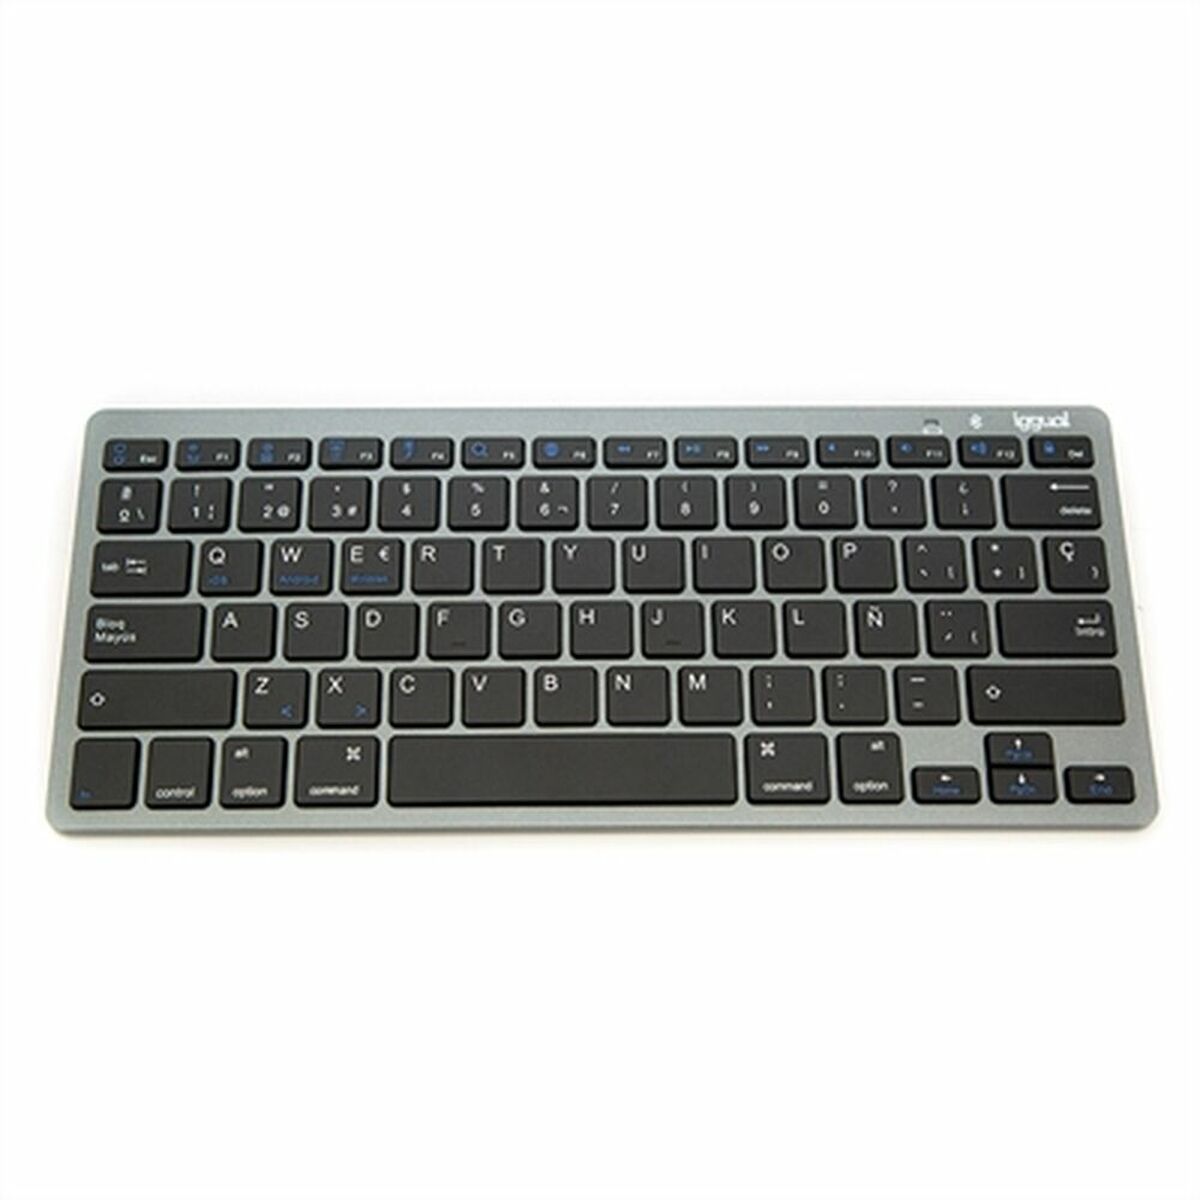 Drahtlose Tastatur iggual IGG31691 - CA International 